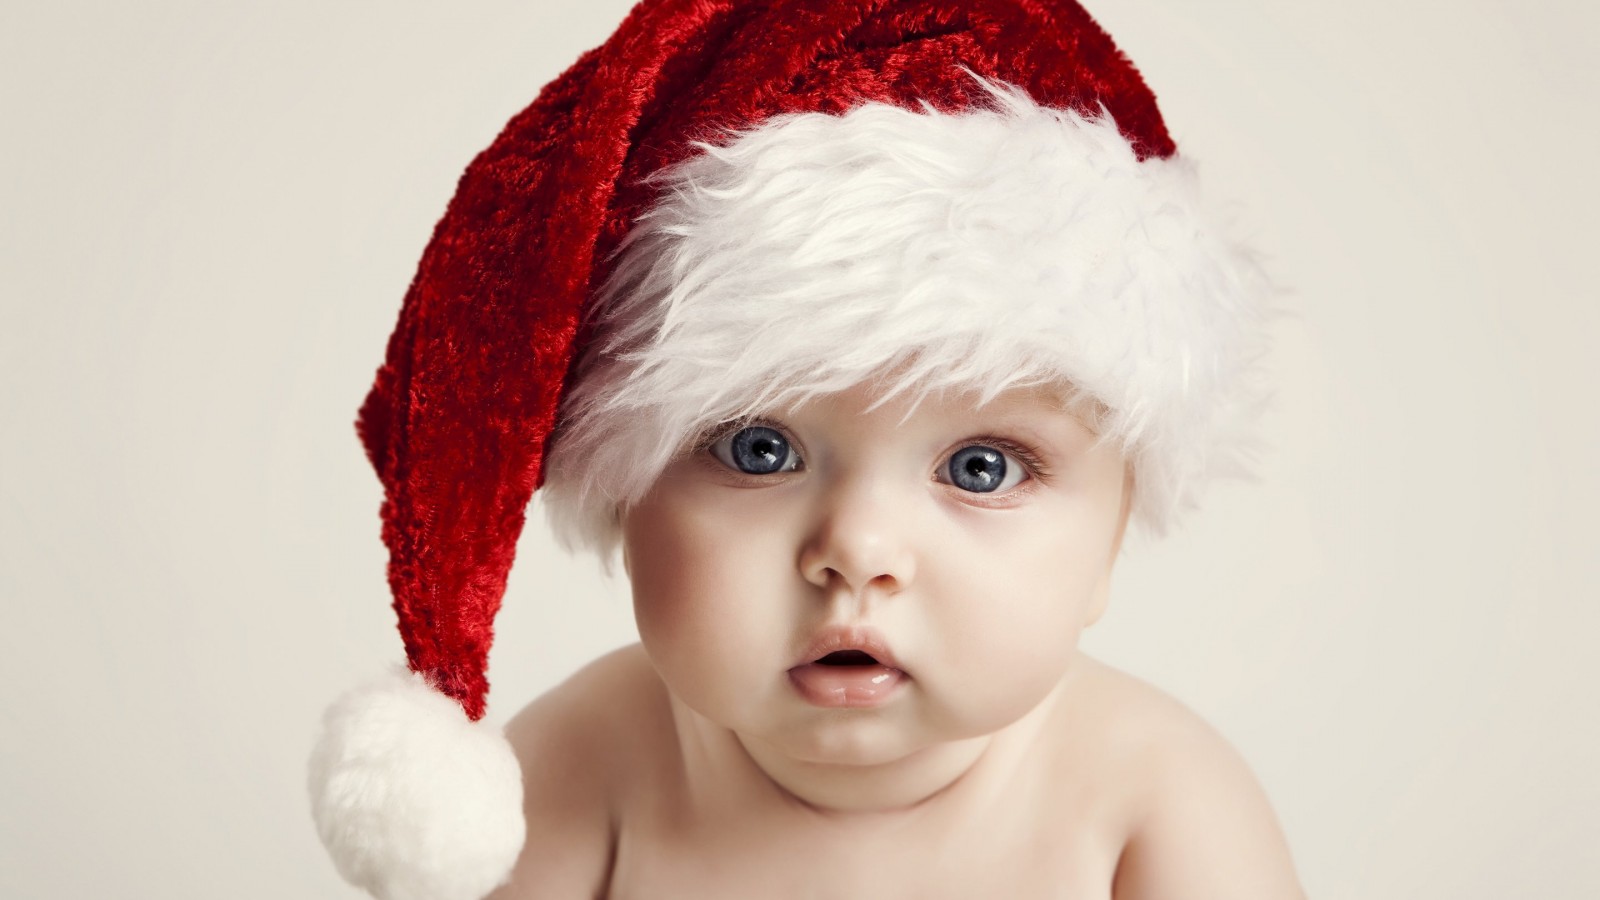 Santa Claus Baby Boy Wallpaper for Desktop 1600x900